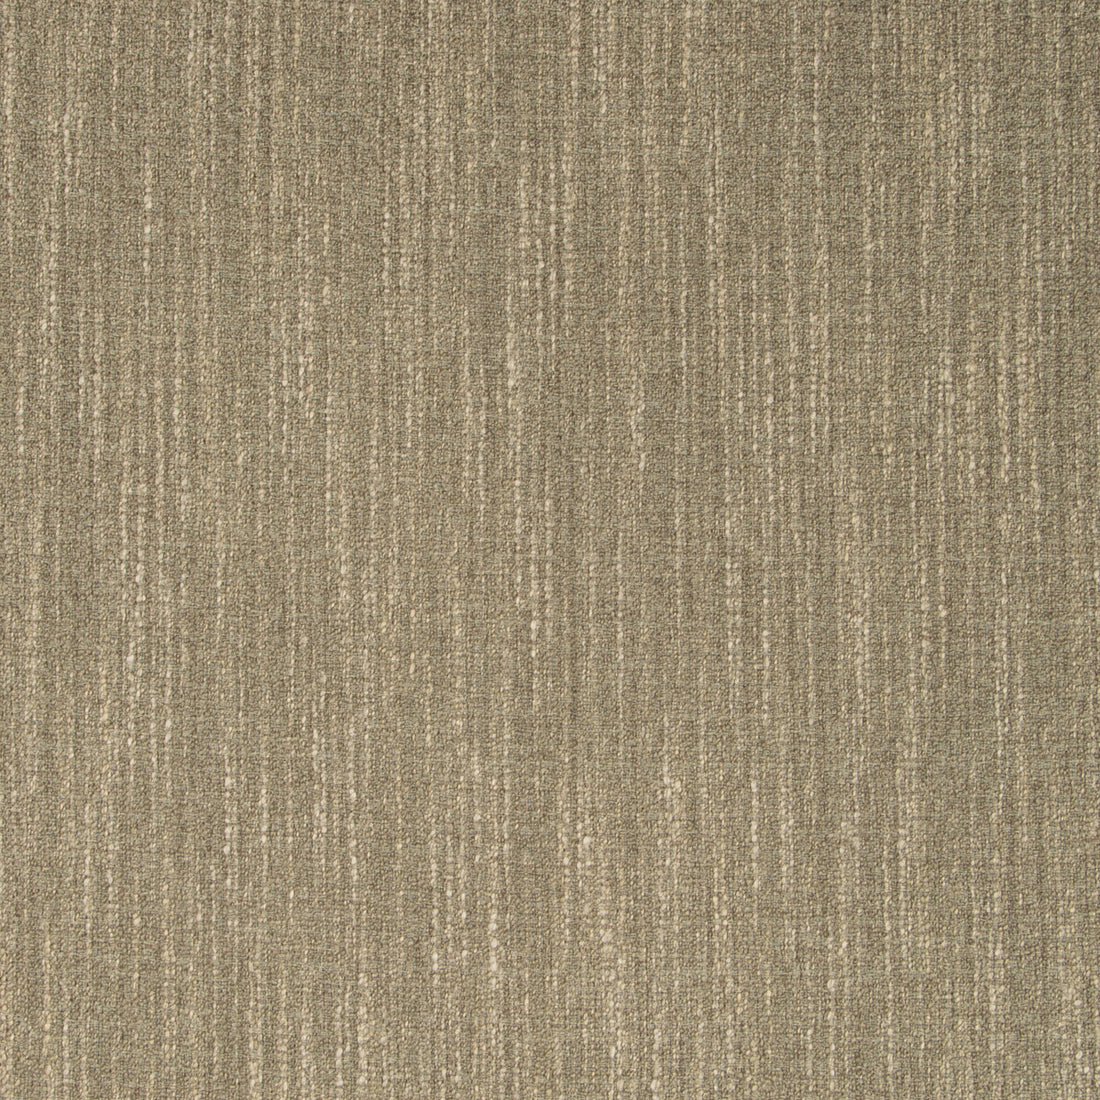 Kravet Smart fabric in 35330-11 color - pattern 35330.11.0 - by Kravet Smart in the Performance Kravetarmor collection